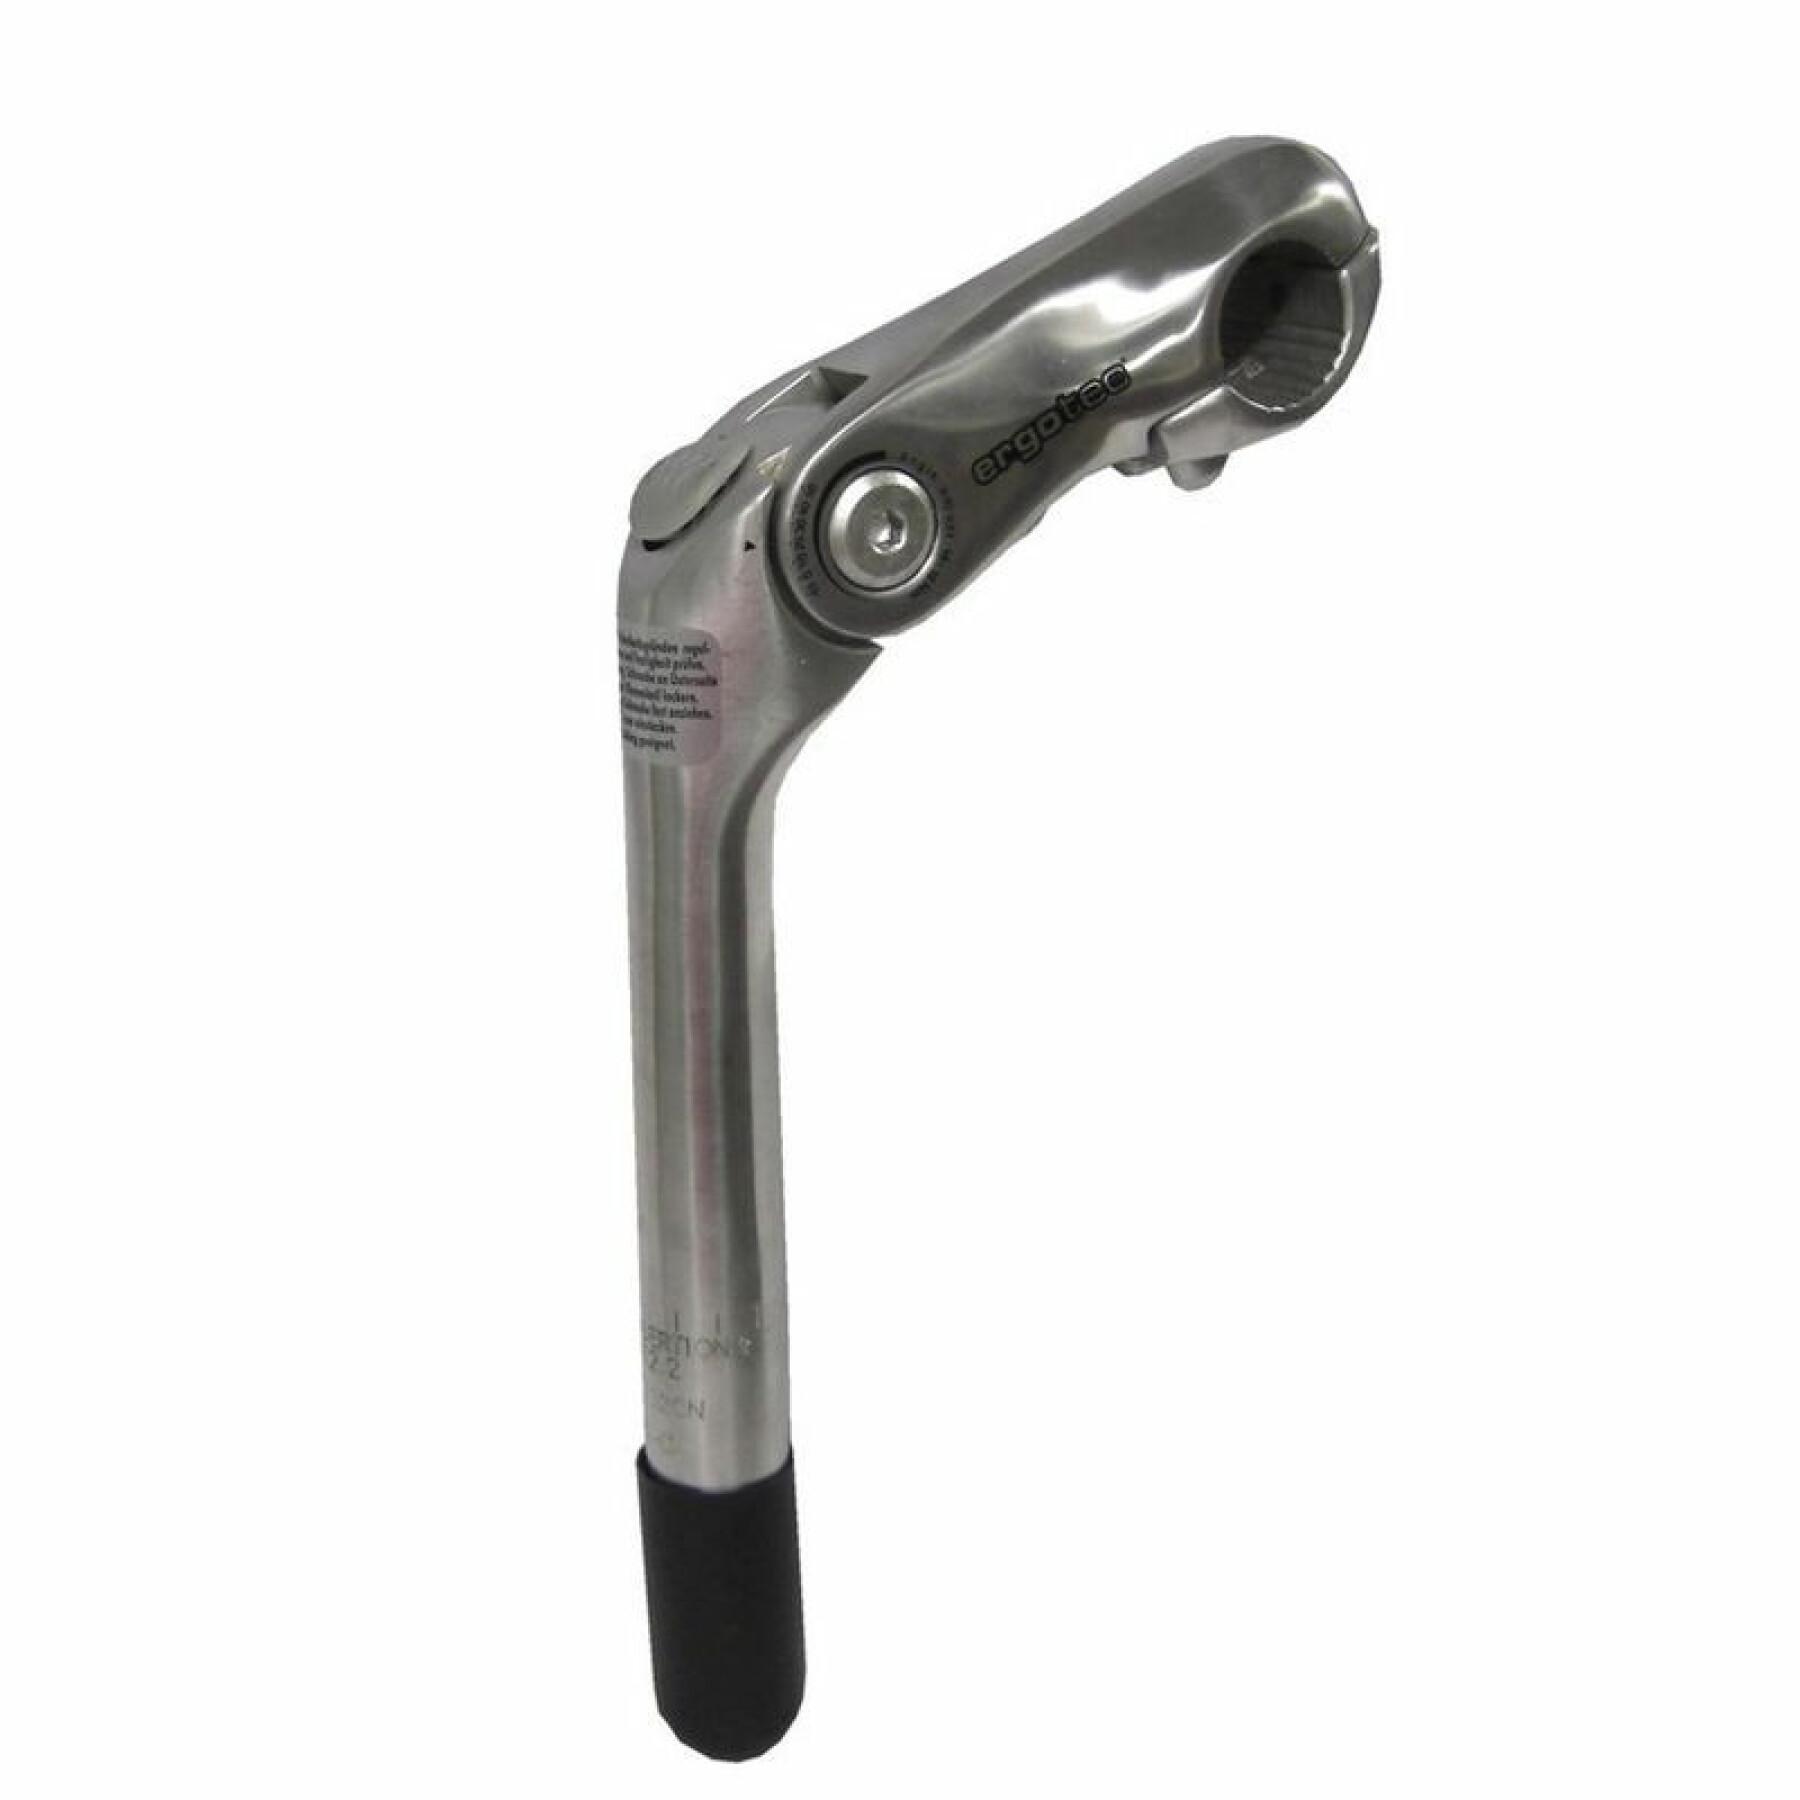 Adjustable plunger stem Ergotec kobra vario 25.4/22.2 90mm 180 aluminium